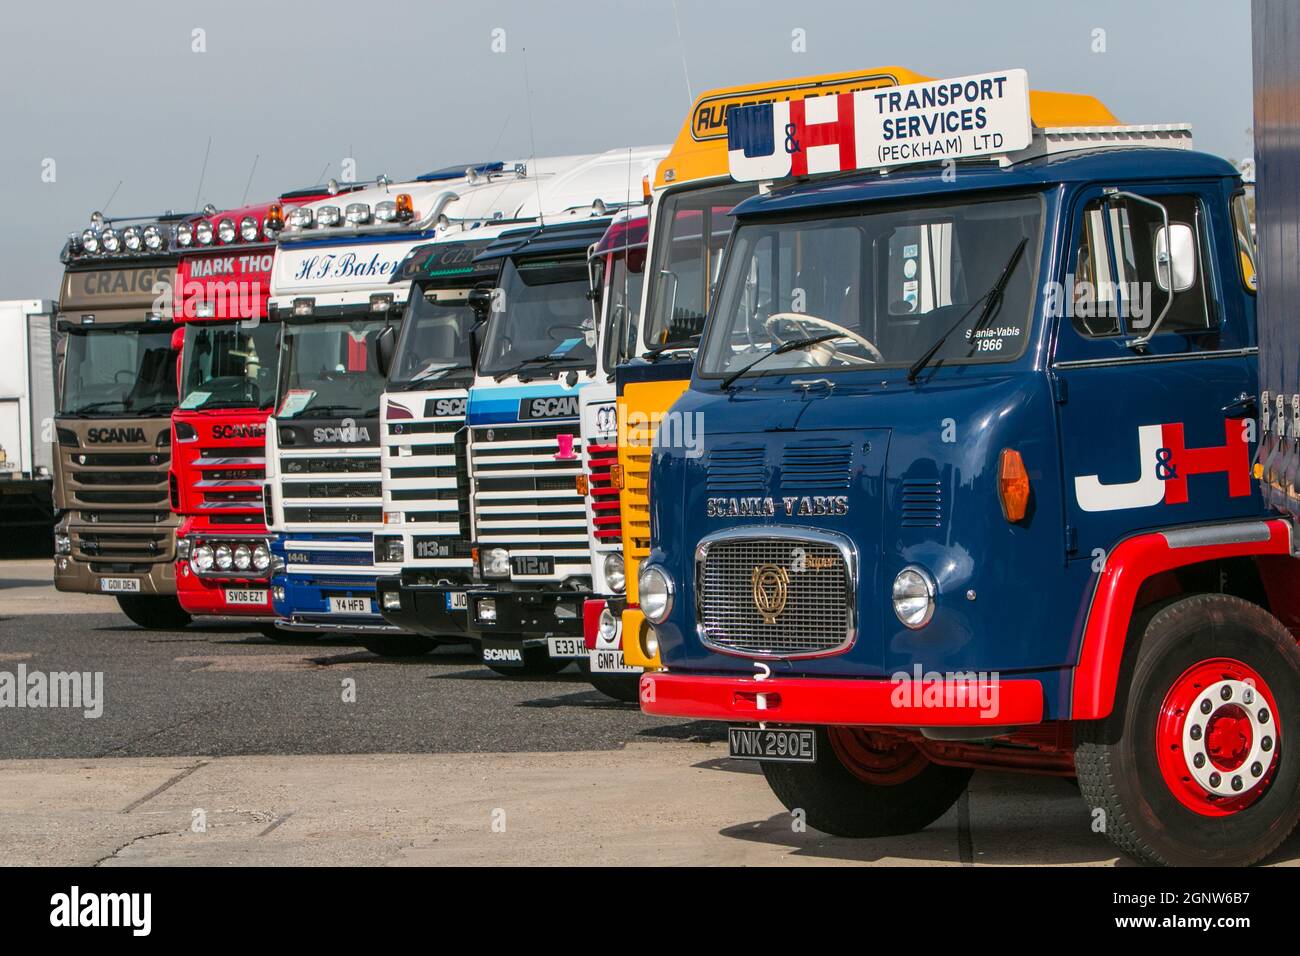 Griffin gathering, Ipswich 2014 Scania, vintage HGV trucks Stock Photo